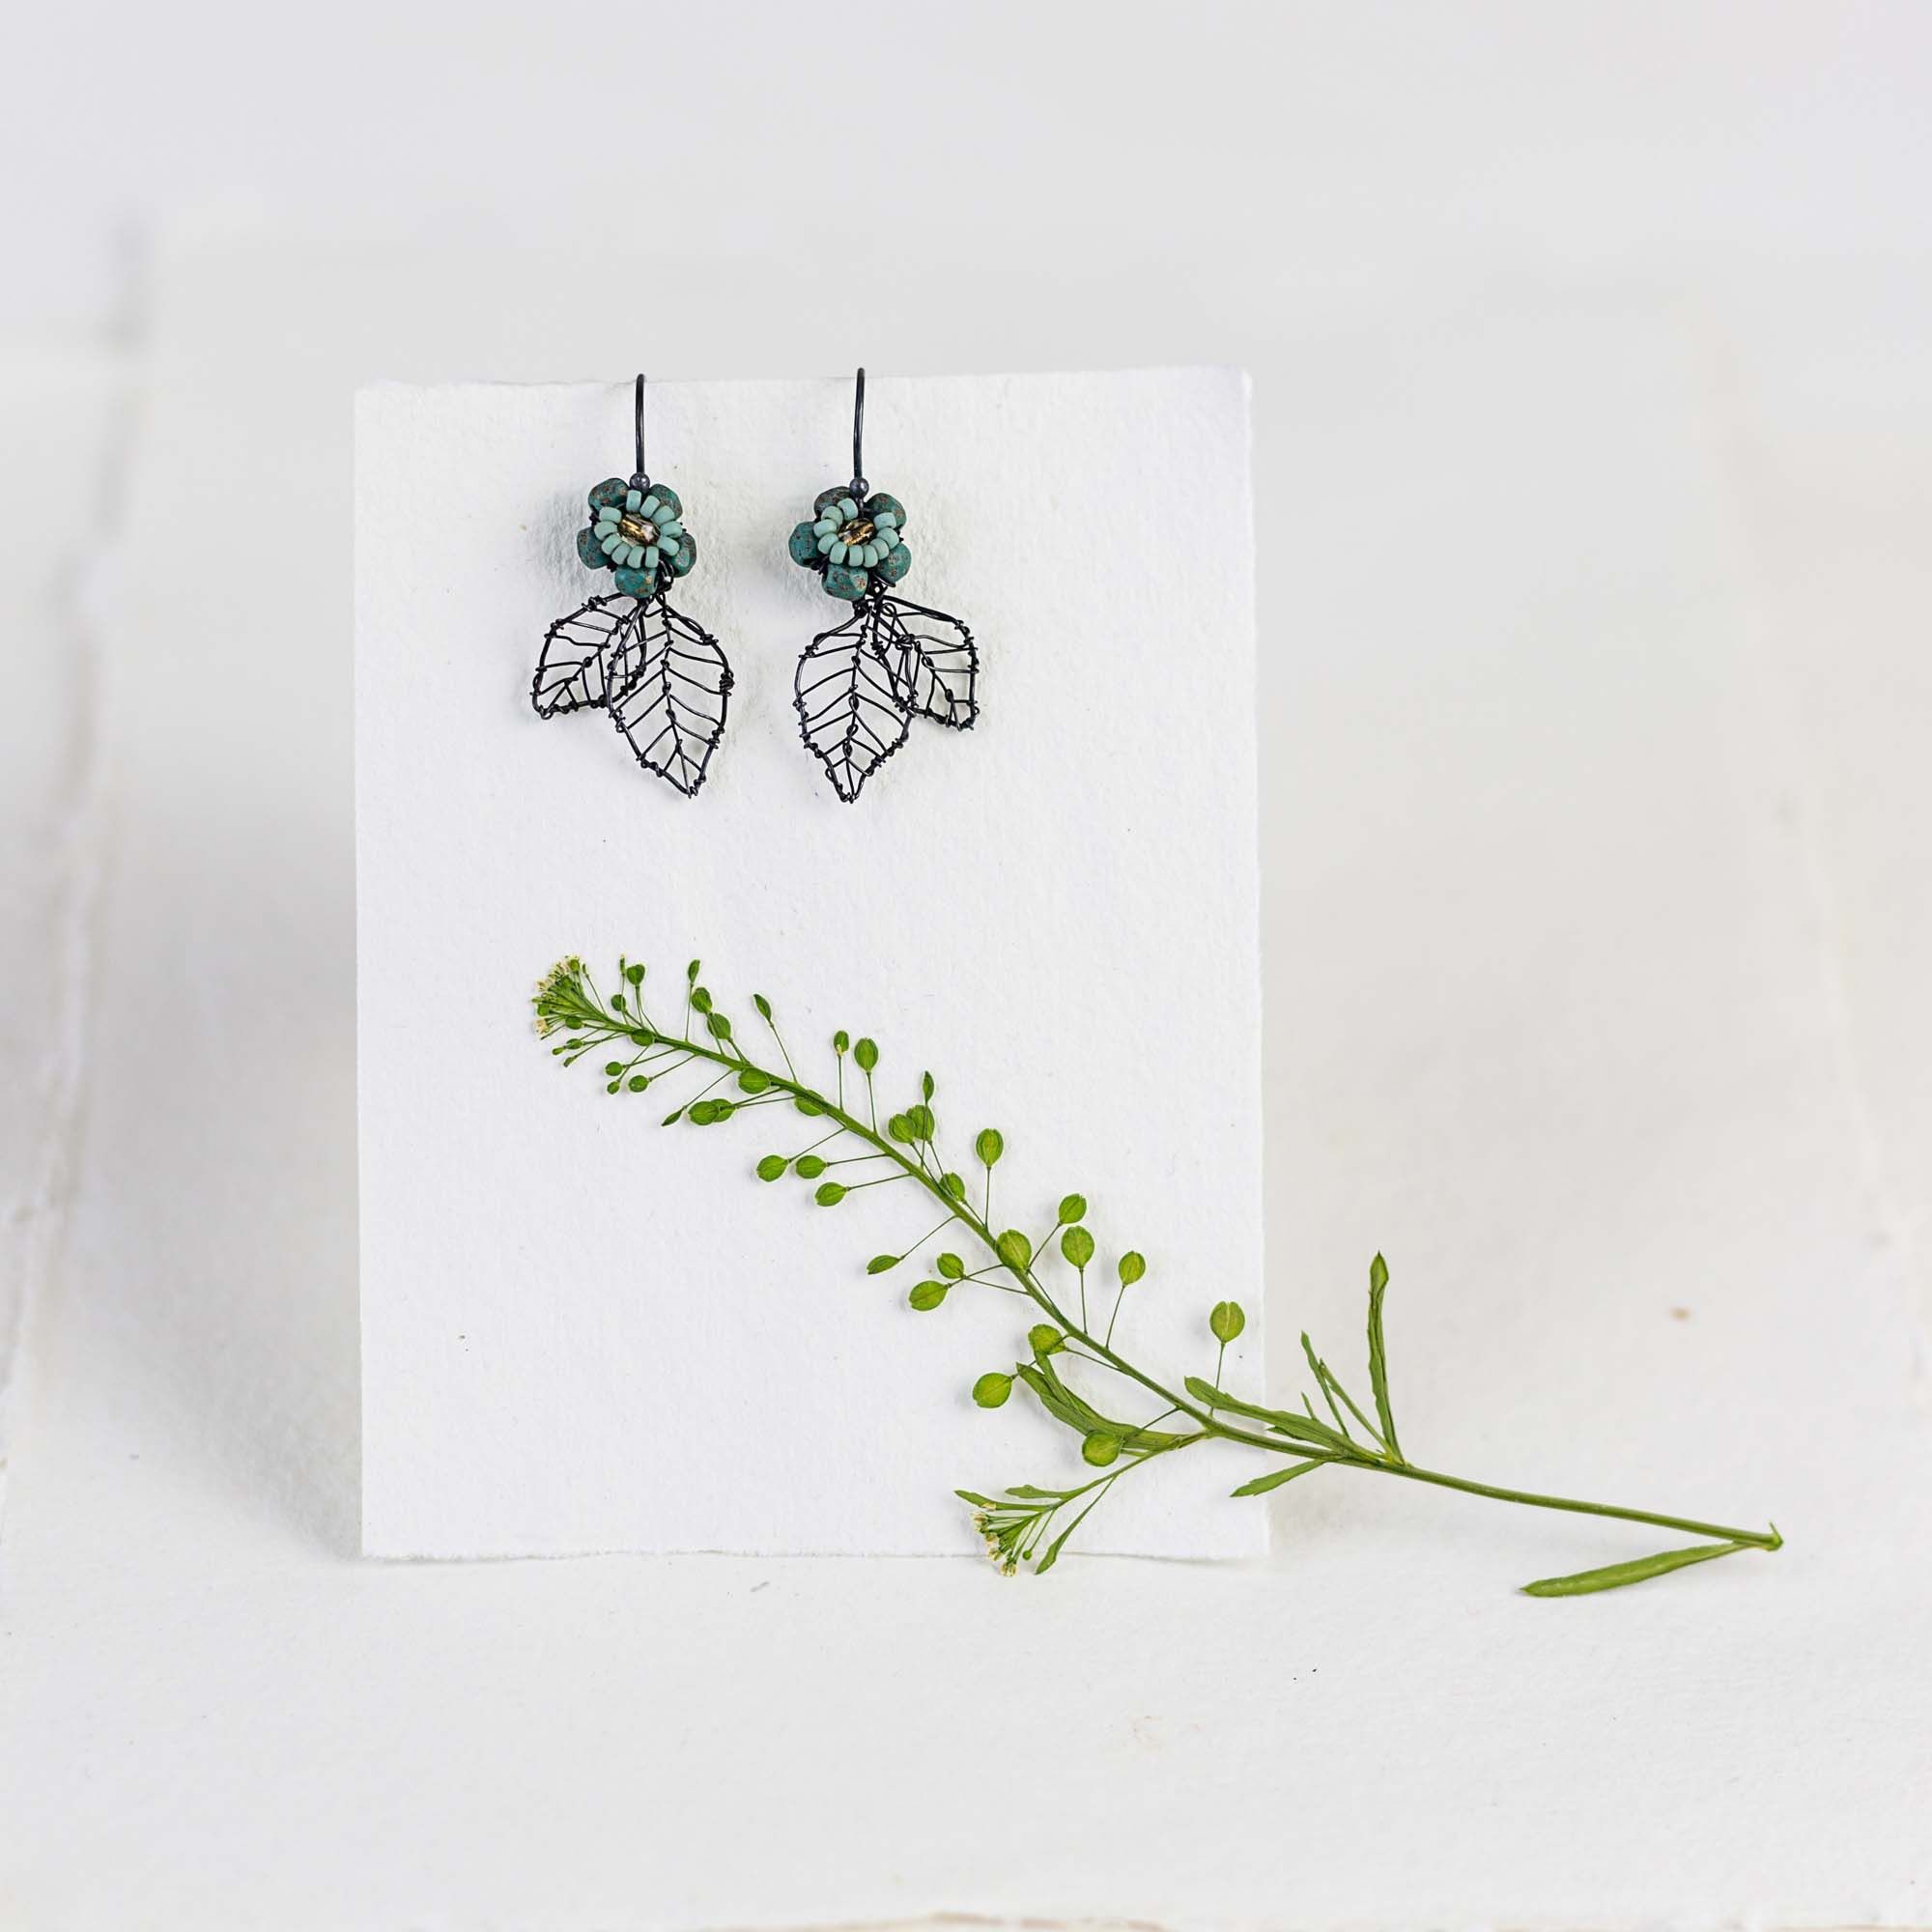 Handmade silver leaf earrings with beads